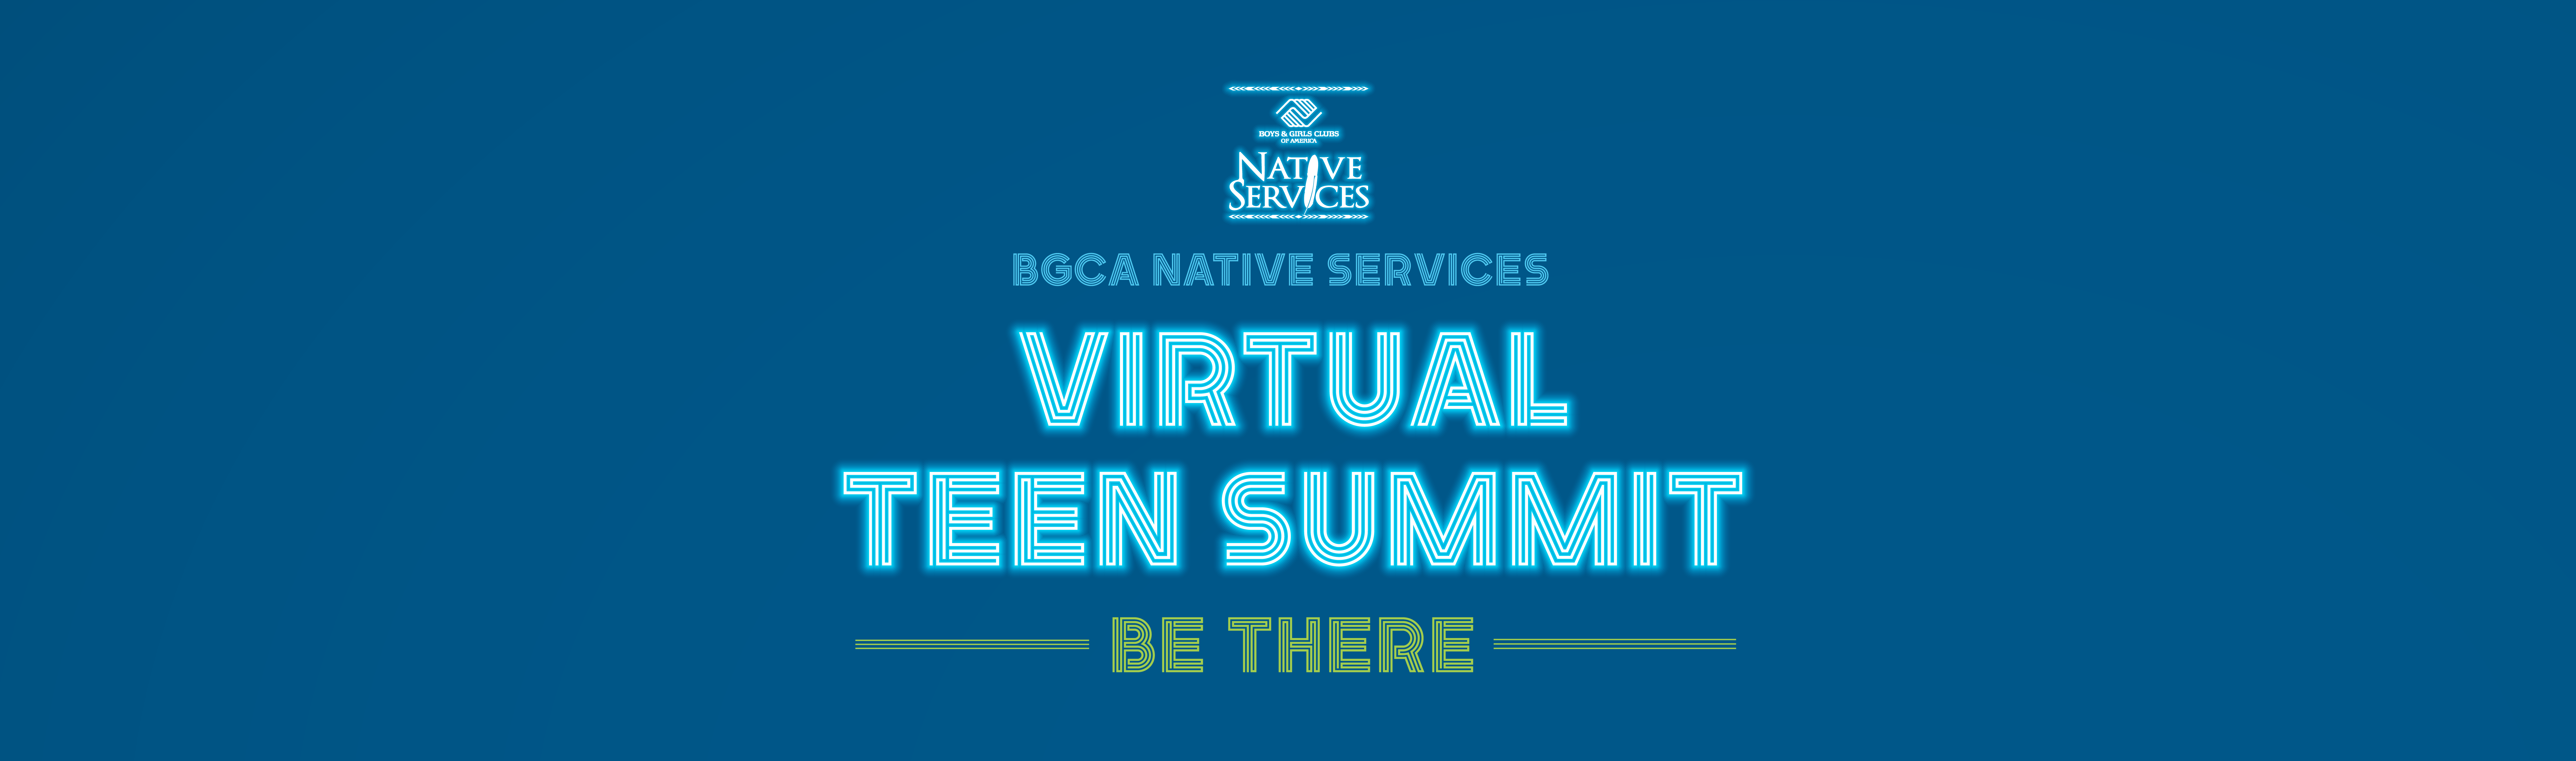 2020 Virtual Teen Summit